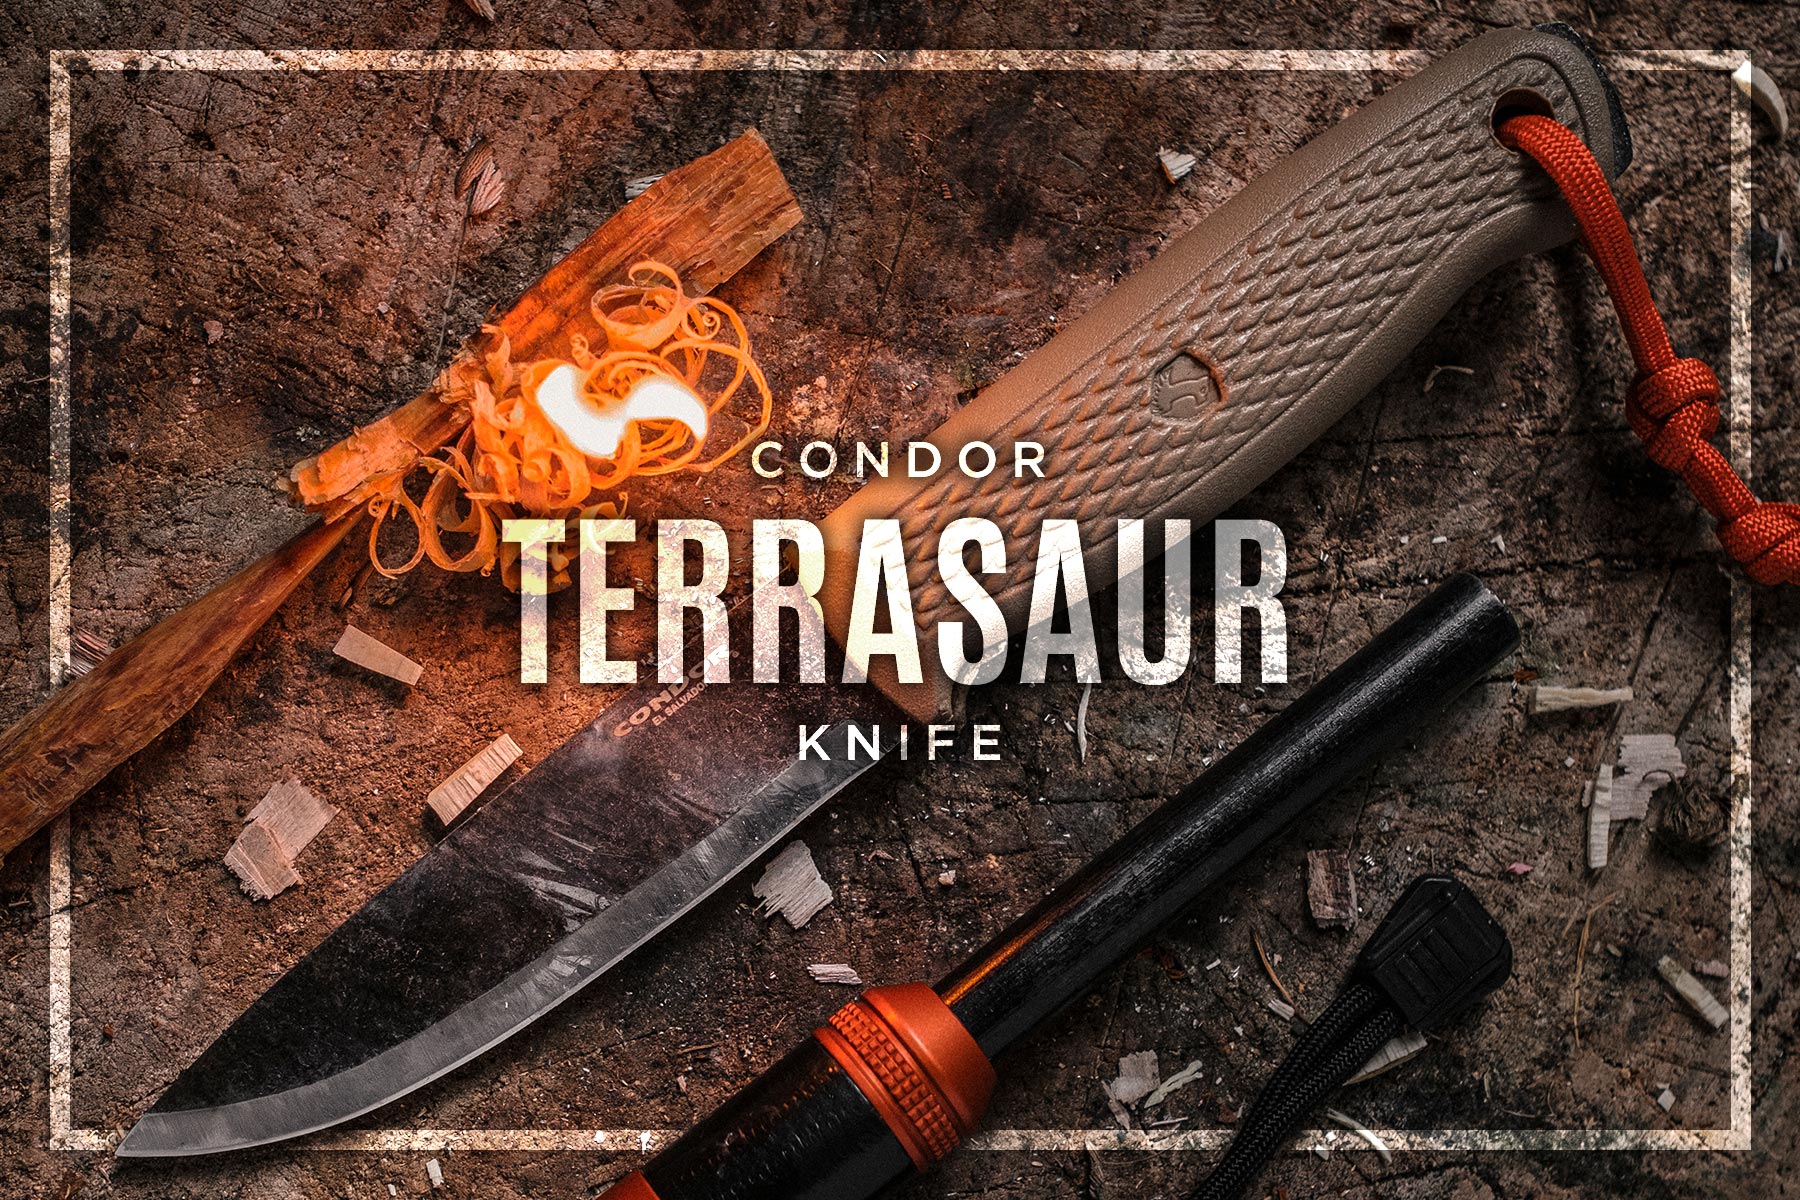 Condor Terrasaur Knife Review